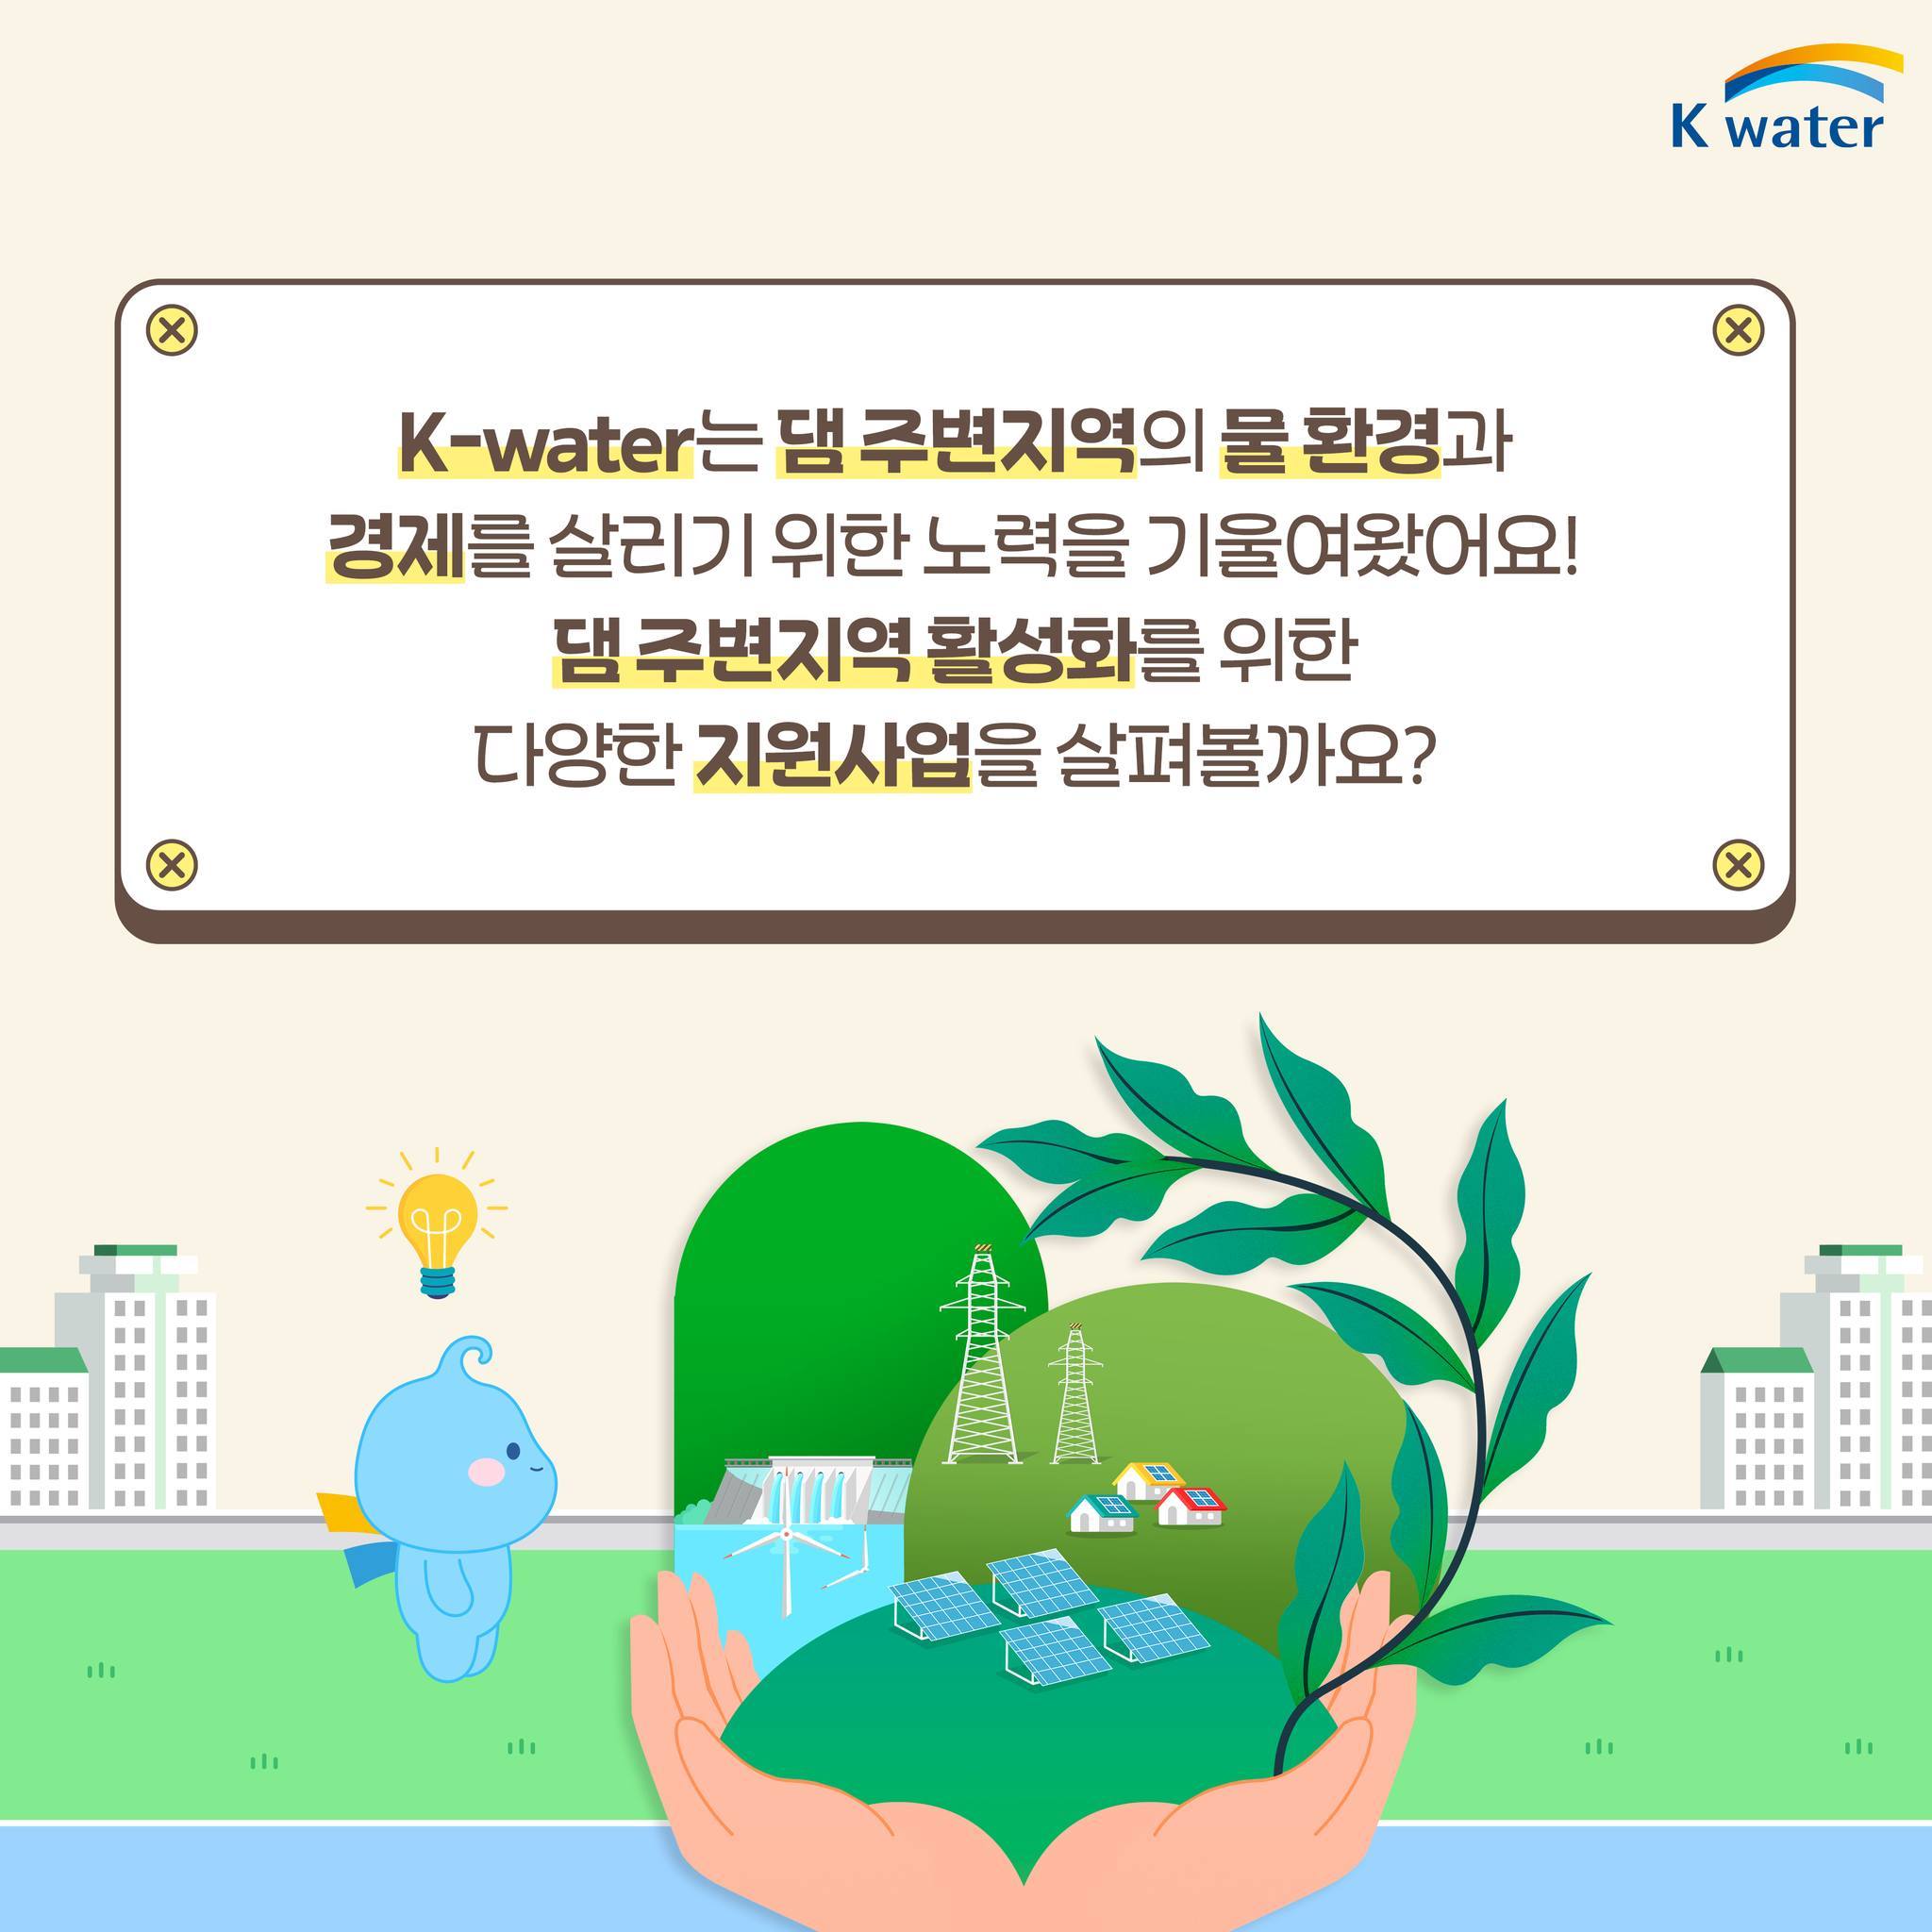 K-water는 댐 주변지역의 물 환경과 경제를 살리기 위한 노력을 기울여왔어요! 댐 주변지역 활성화를 위한 다양한 지원사업을 살펴볼까요?